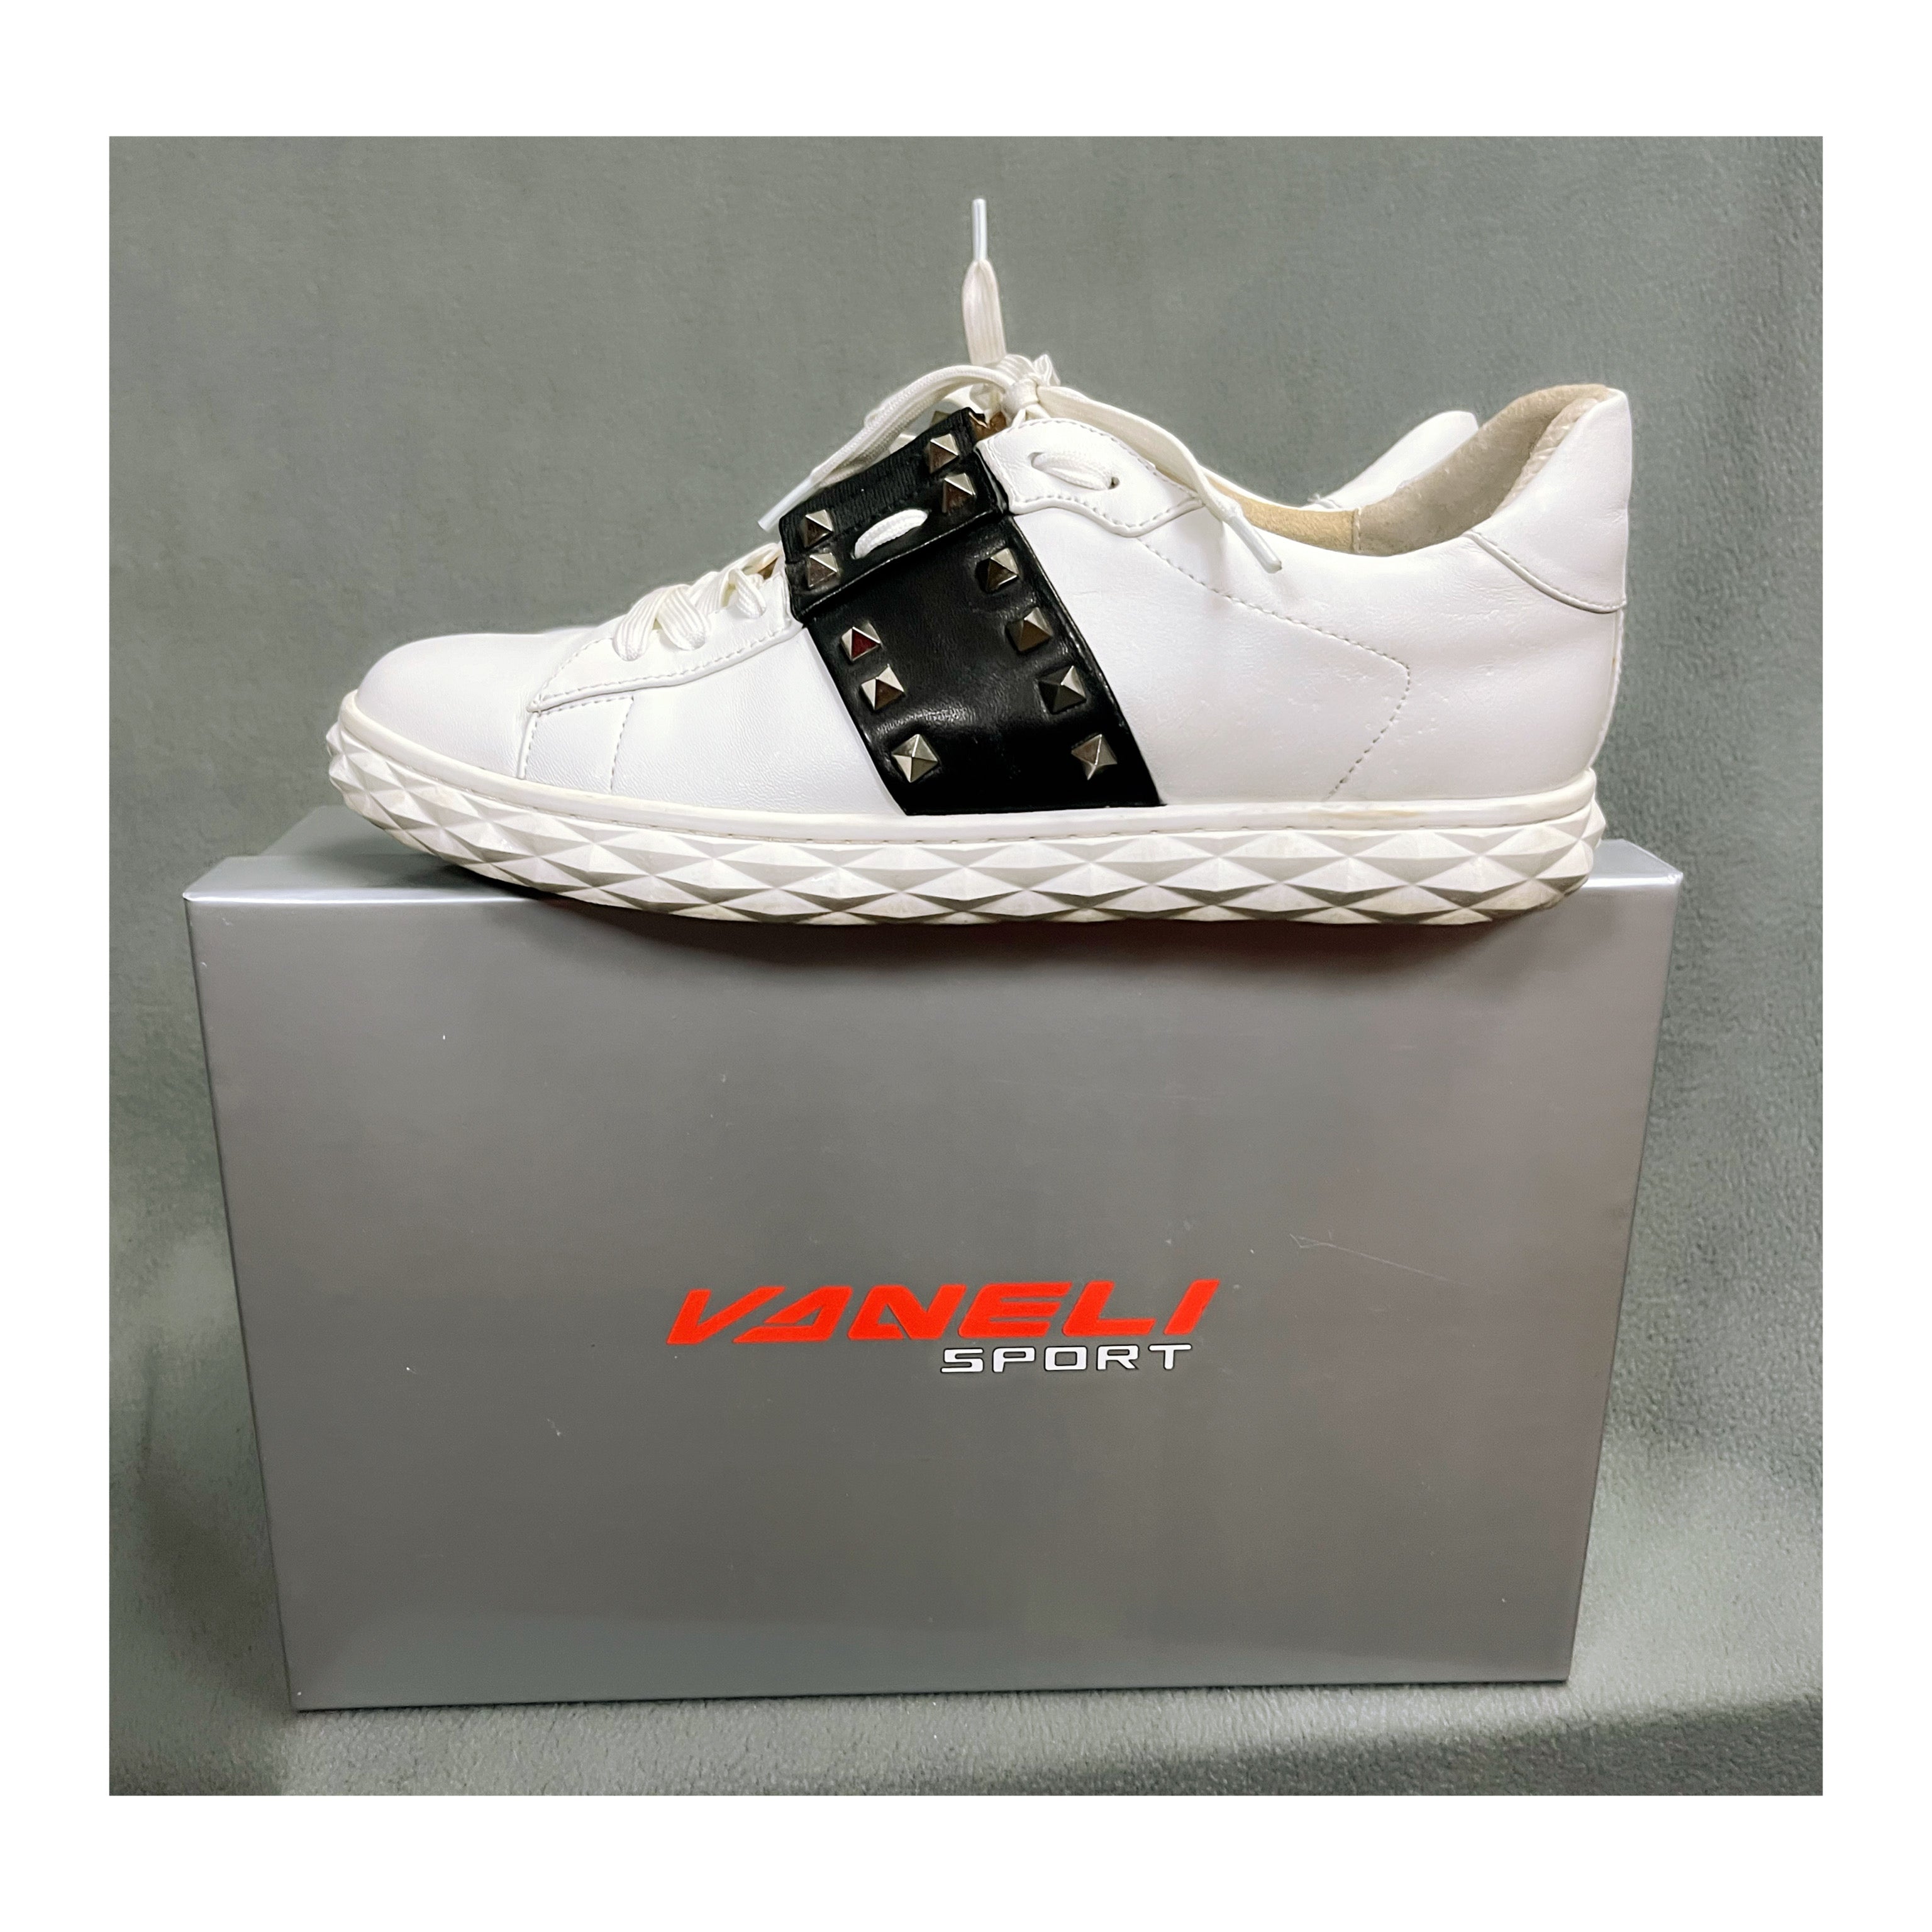 Van Eli white sneakers, size 8.5